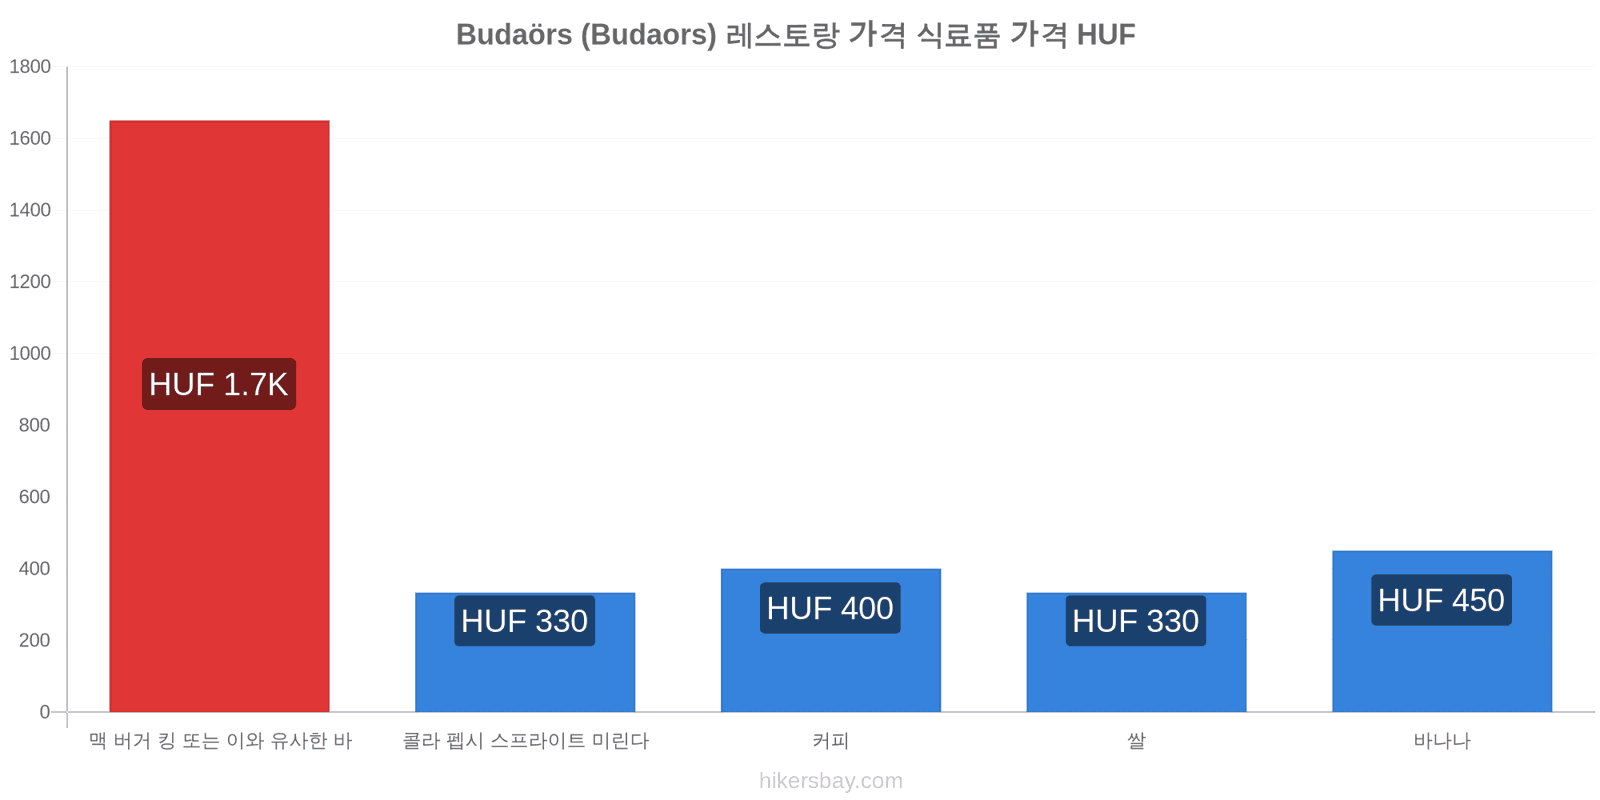 Budaörs (Budaors) 가격 변동 hikersbay.com